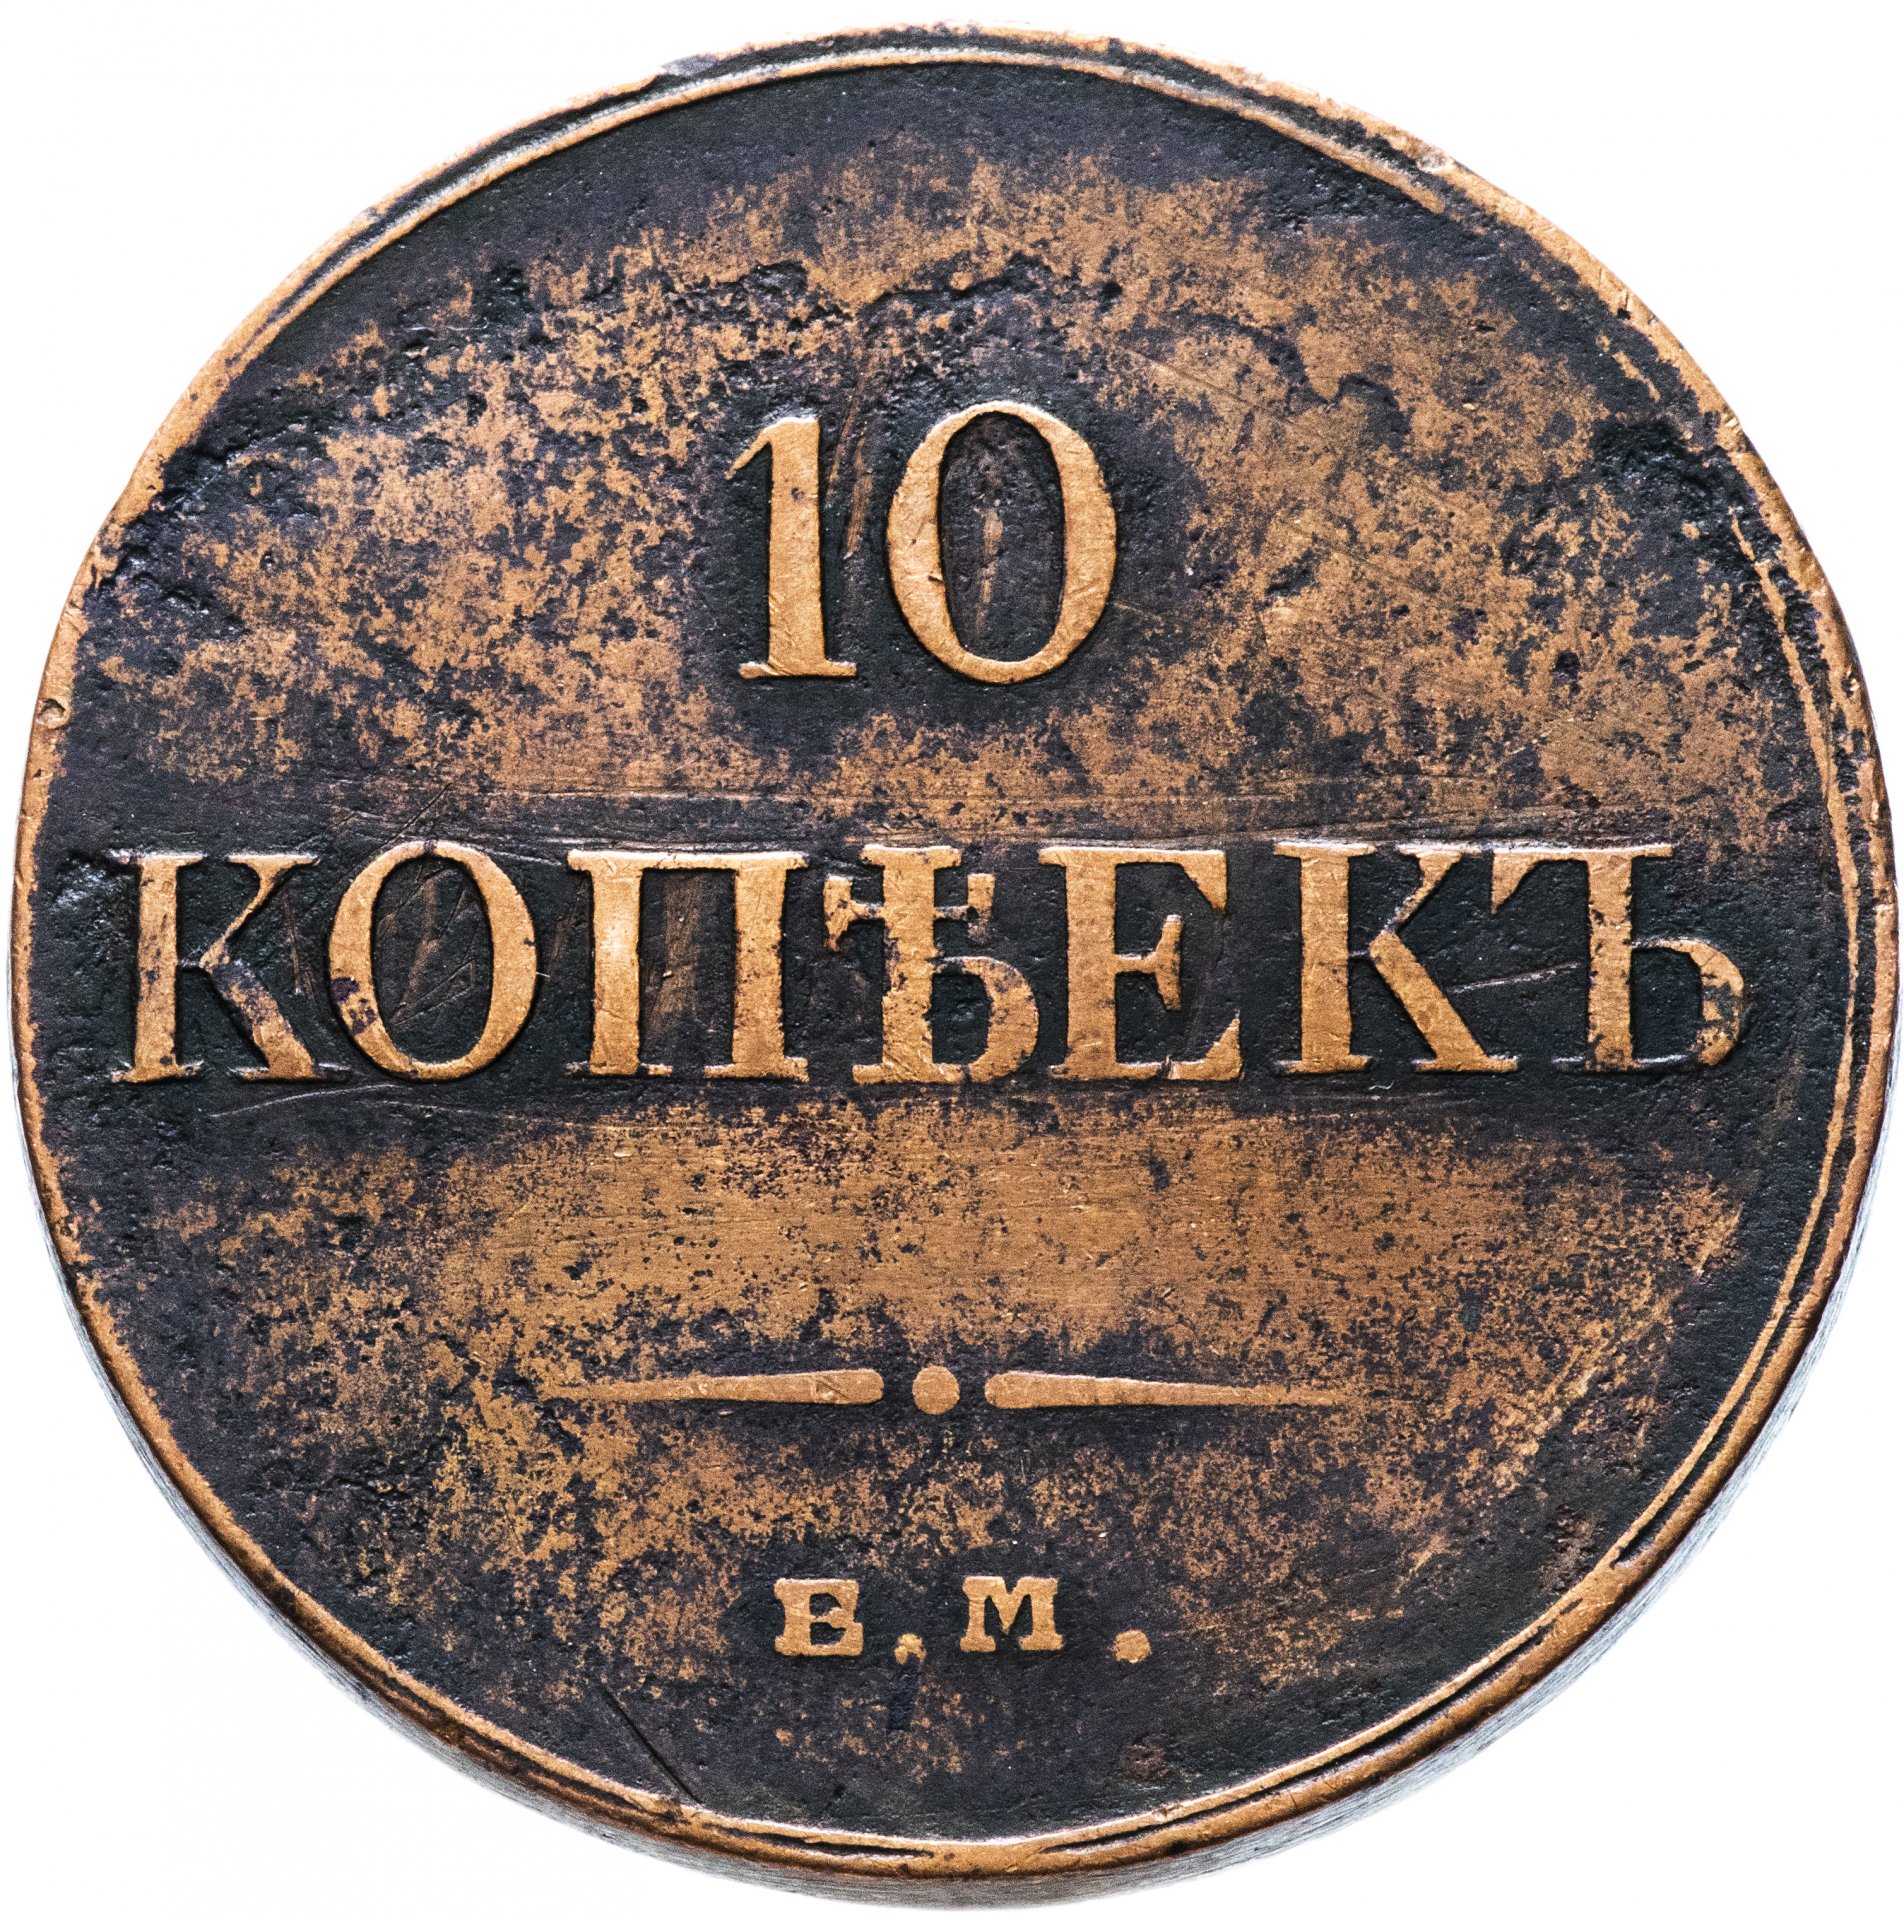 10 копеек сейчас. 10 Копеек 1834. Монета 10 копеек 1833 ФХ ем. Старинная монета 10 копеек. 10 Копеек 1834г медь.